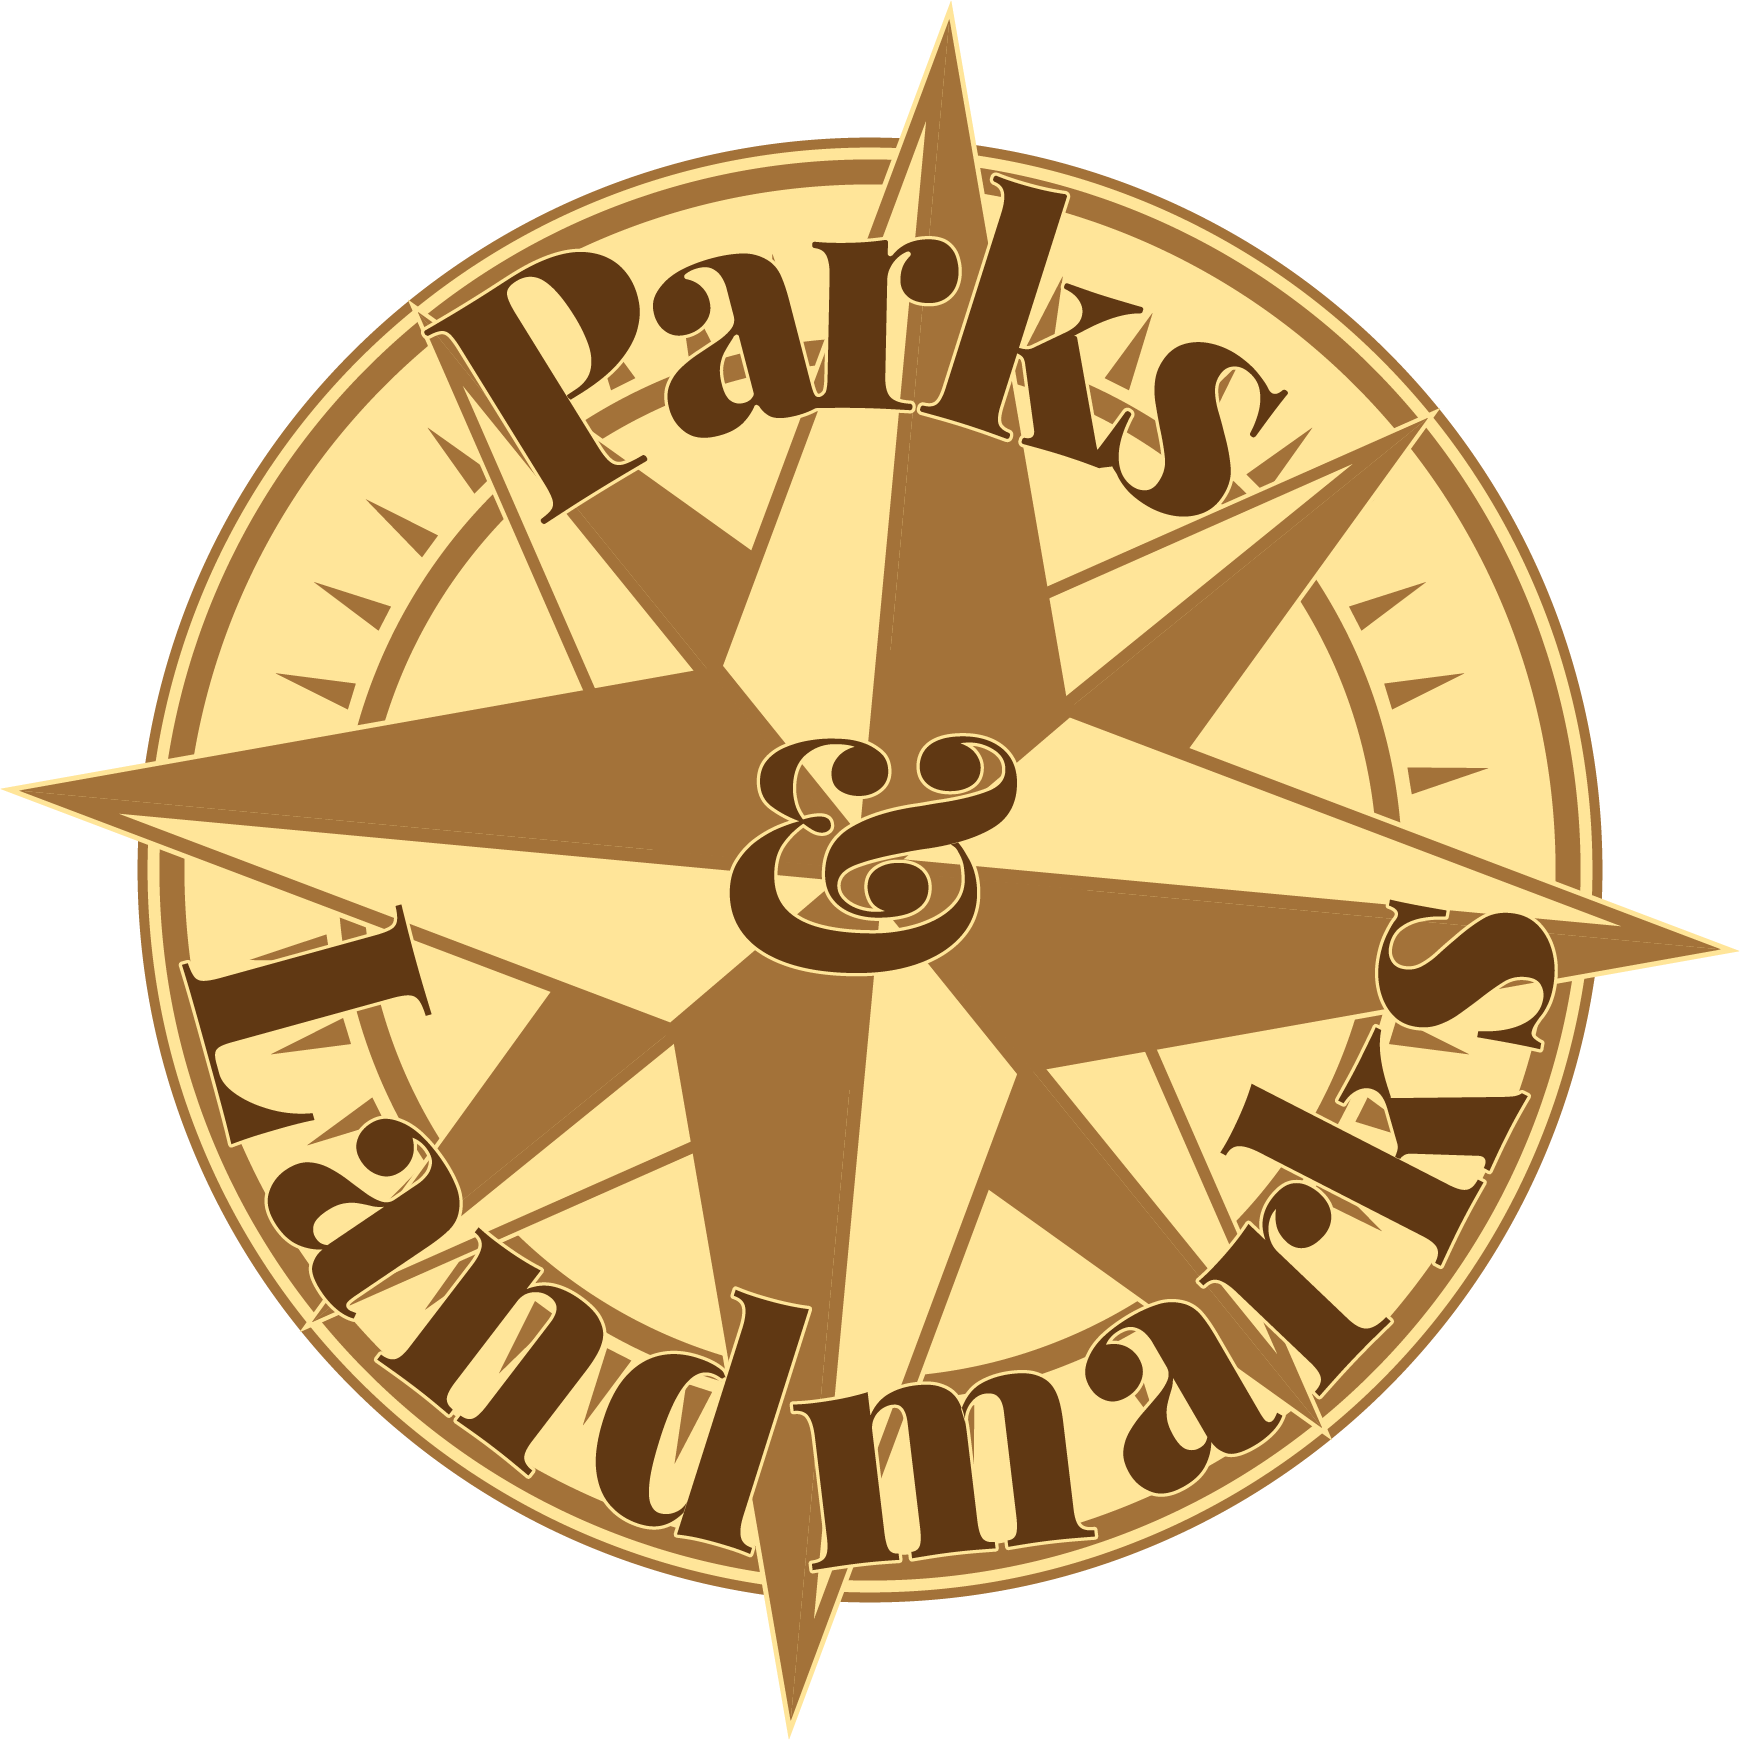 Parks & Landmarks: American History via Coolers